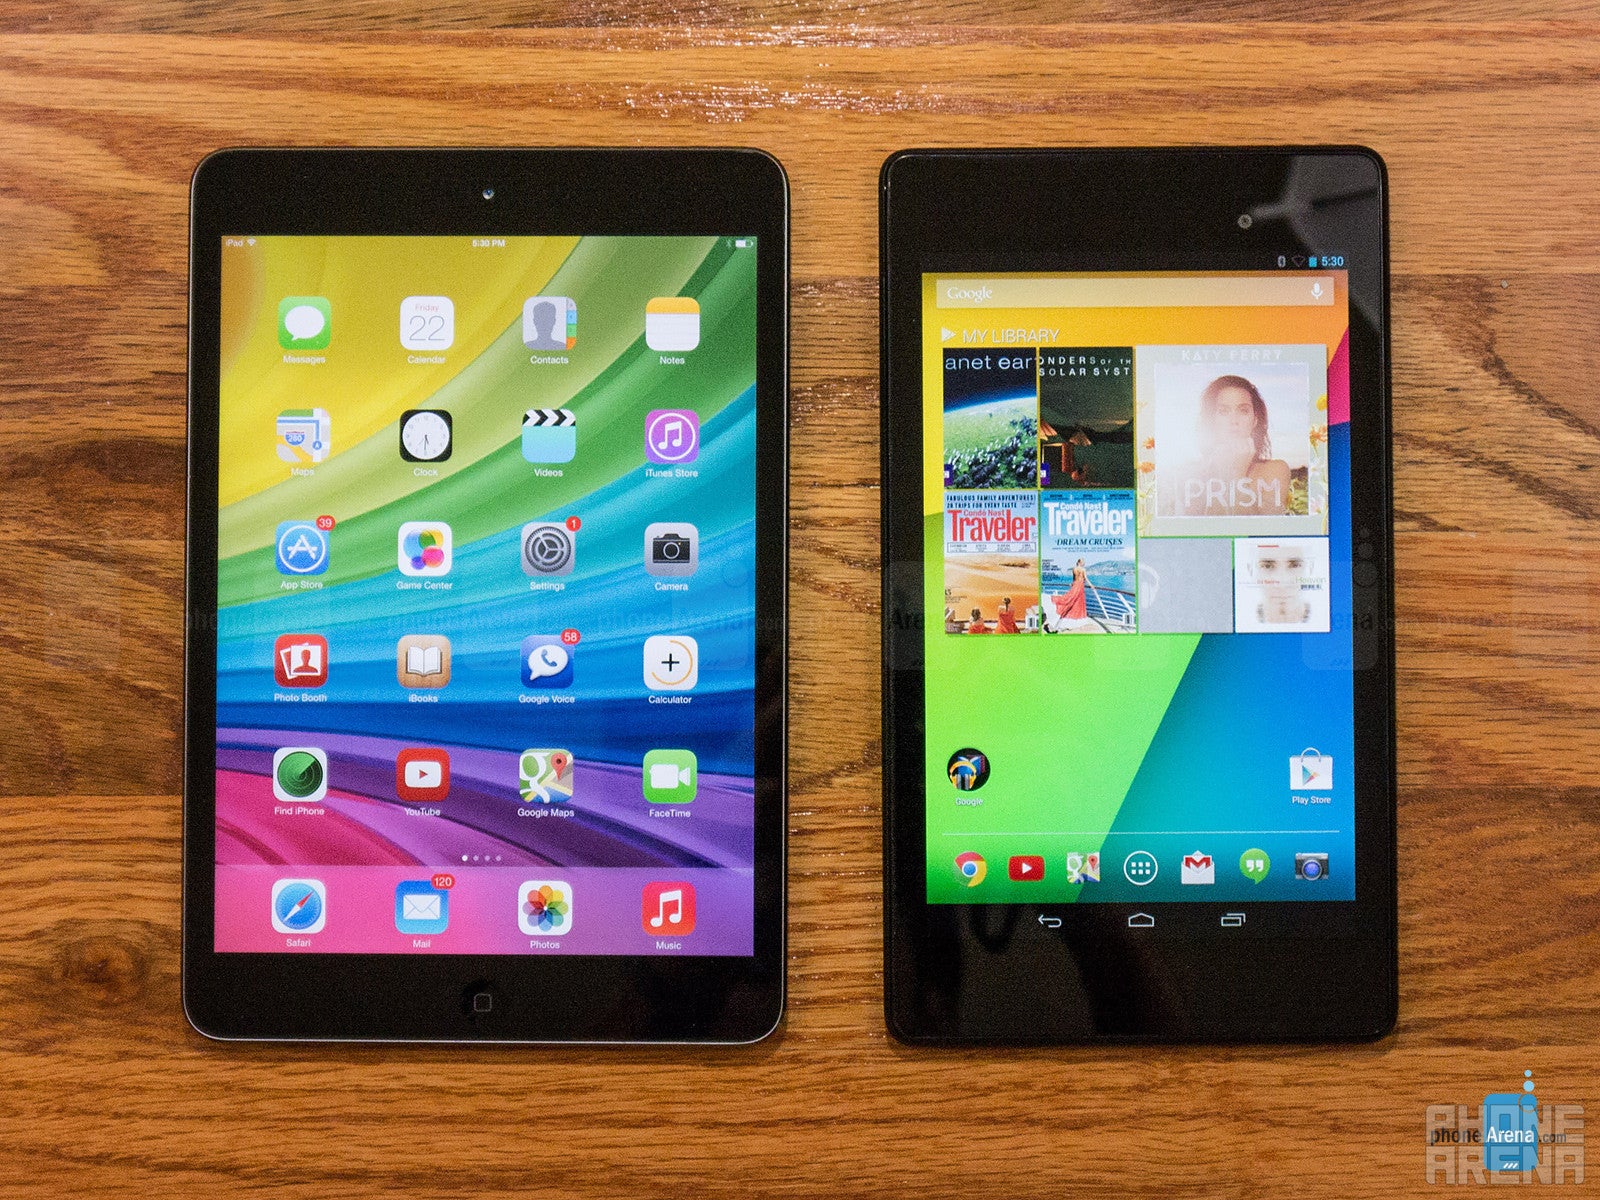 Apple iPad mini 2 vs Google Nexus 7